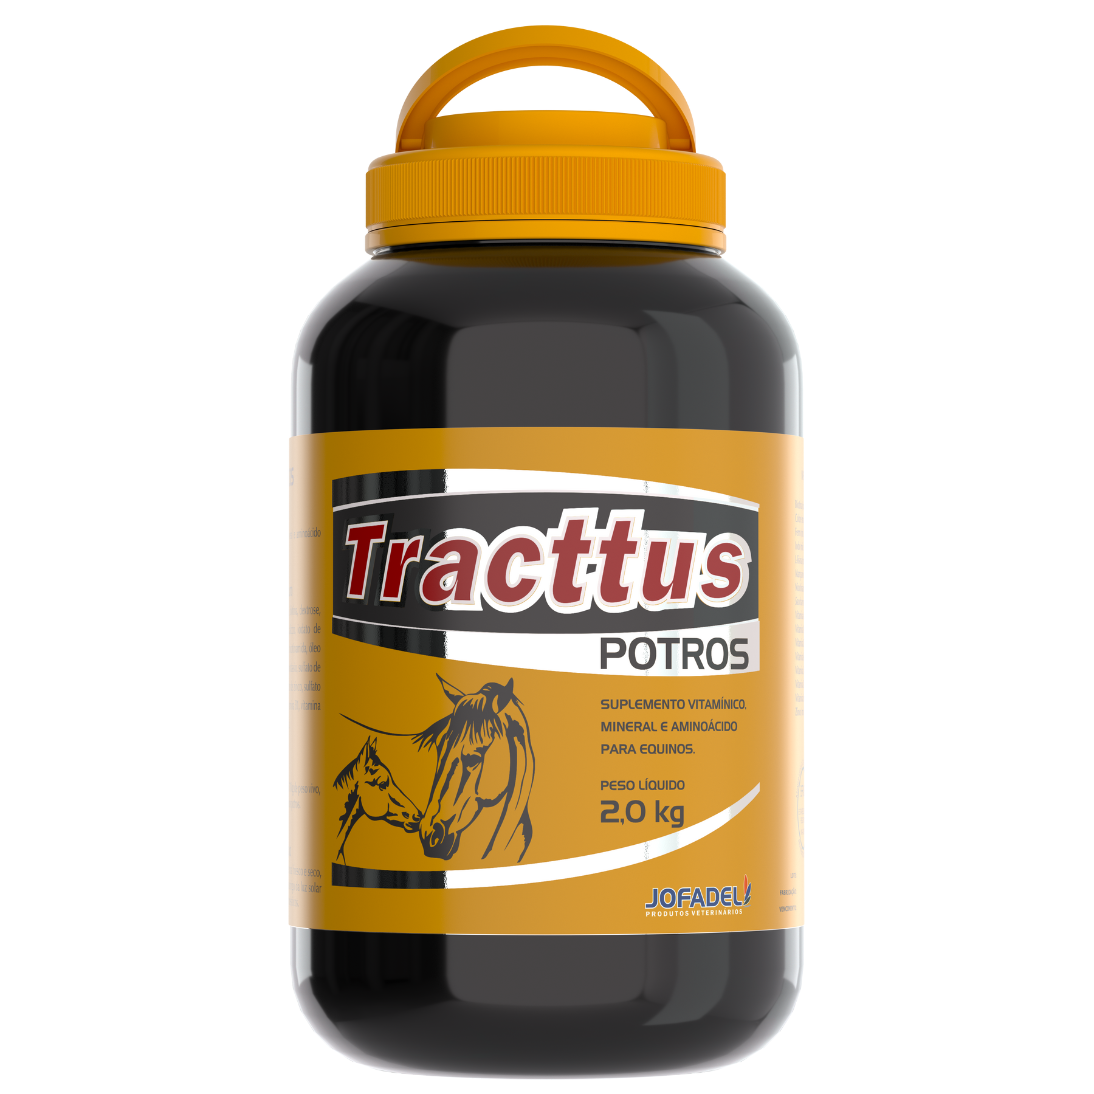 Tracttus Potros®